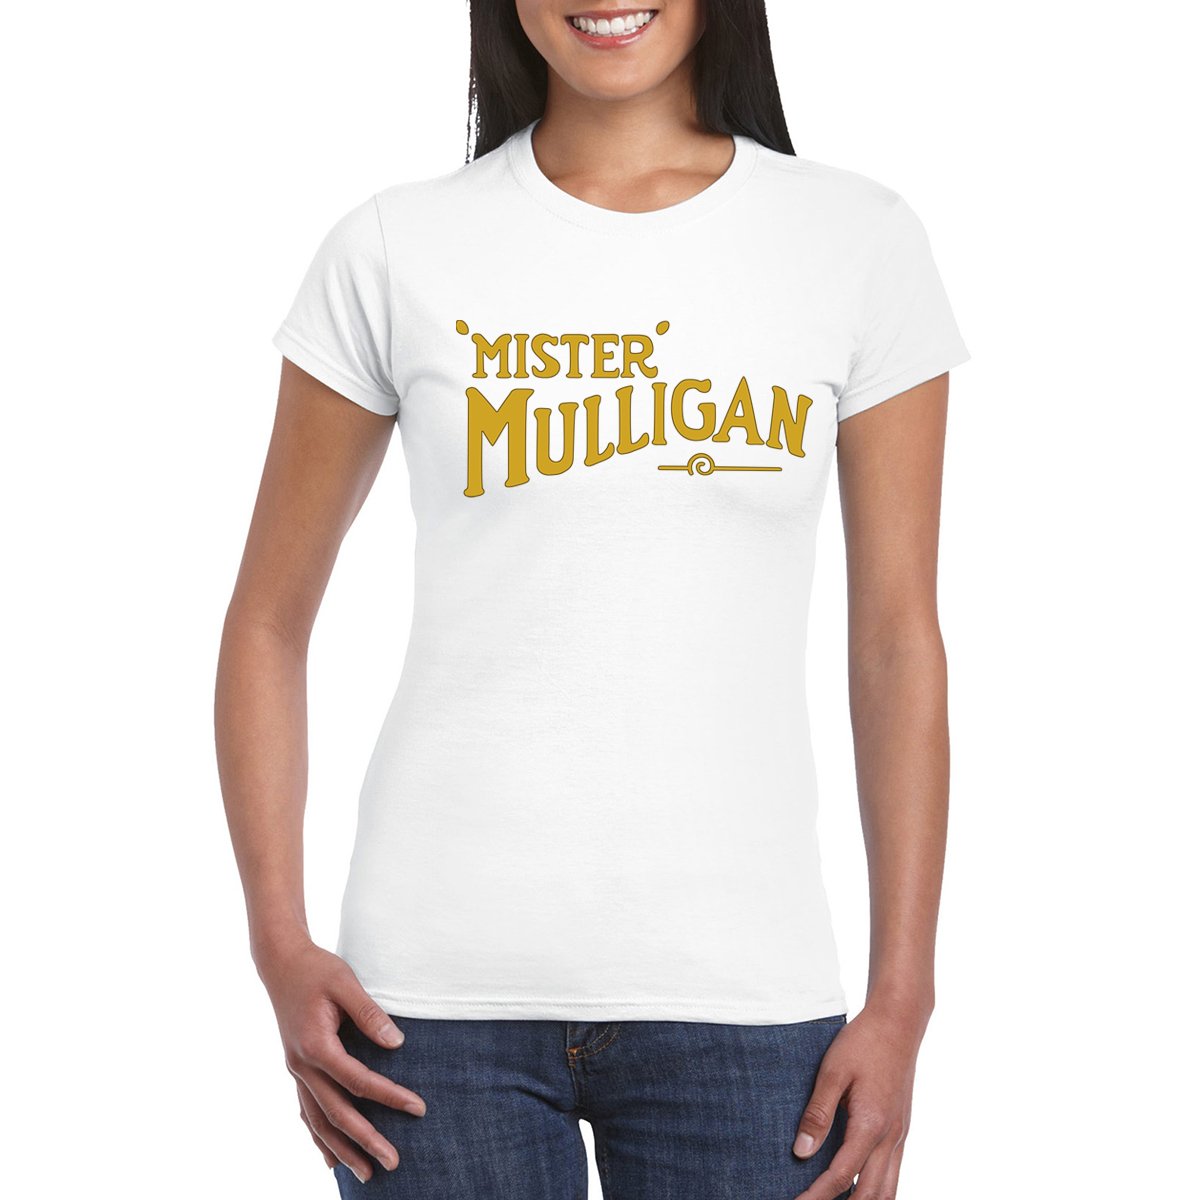 Mister Mulligan Woman's Semi-Fitted T-Shirt